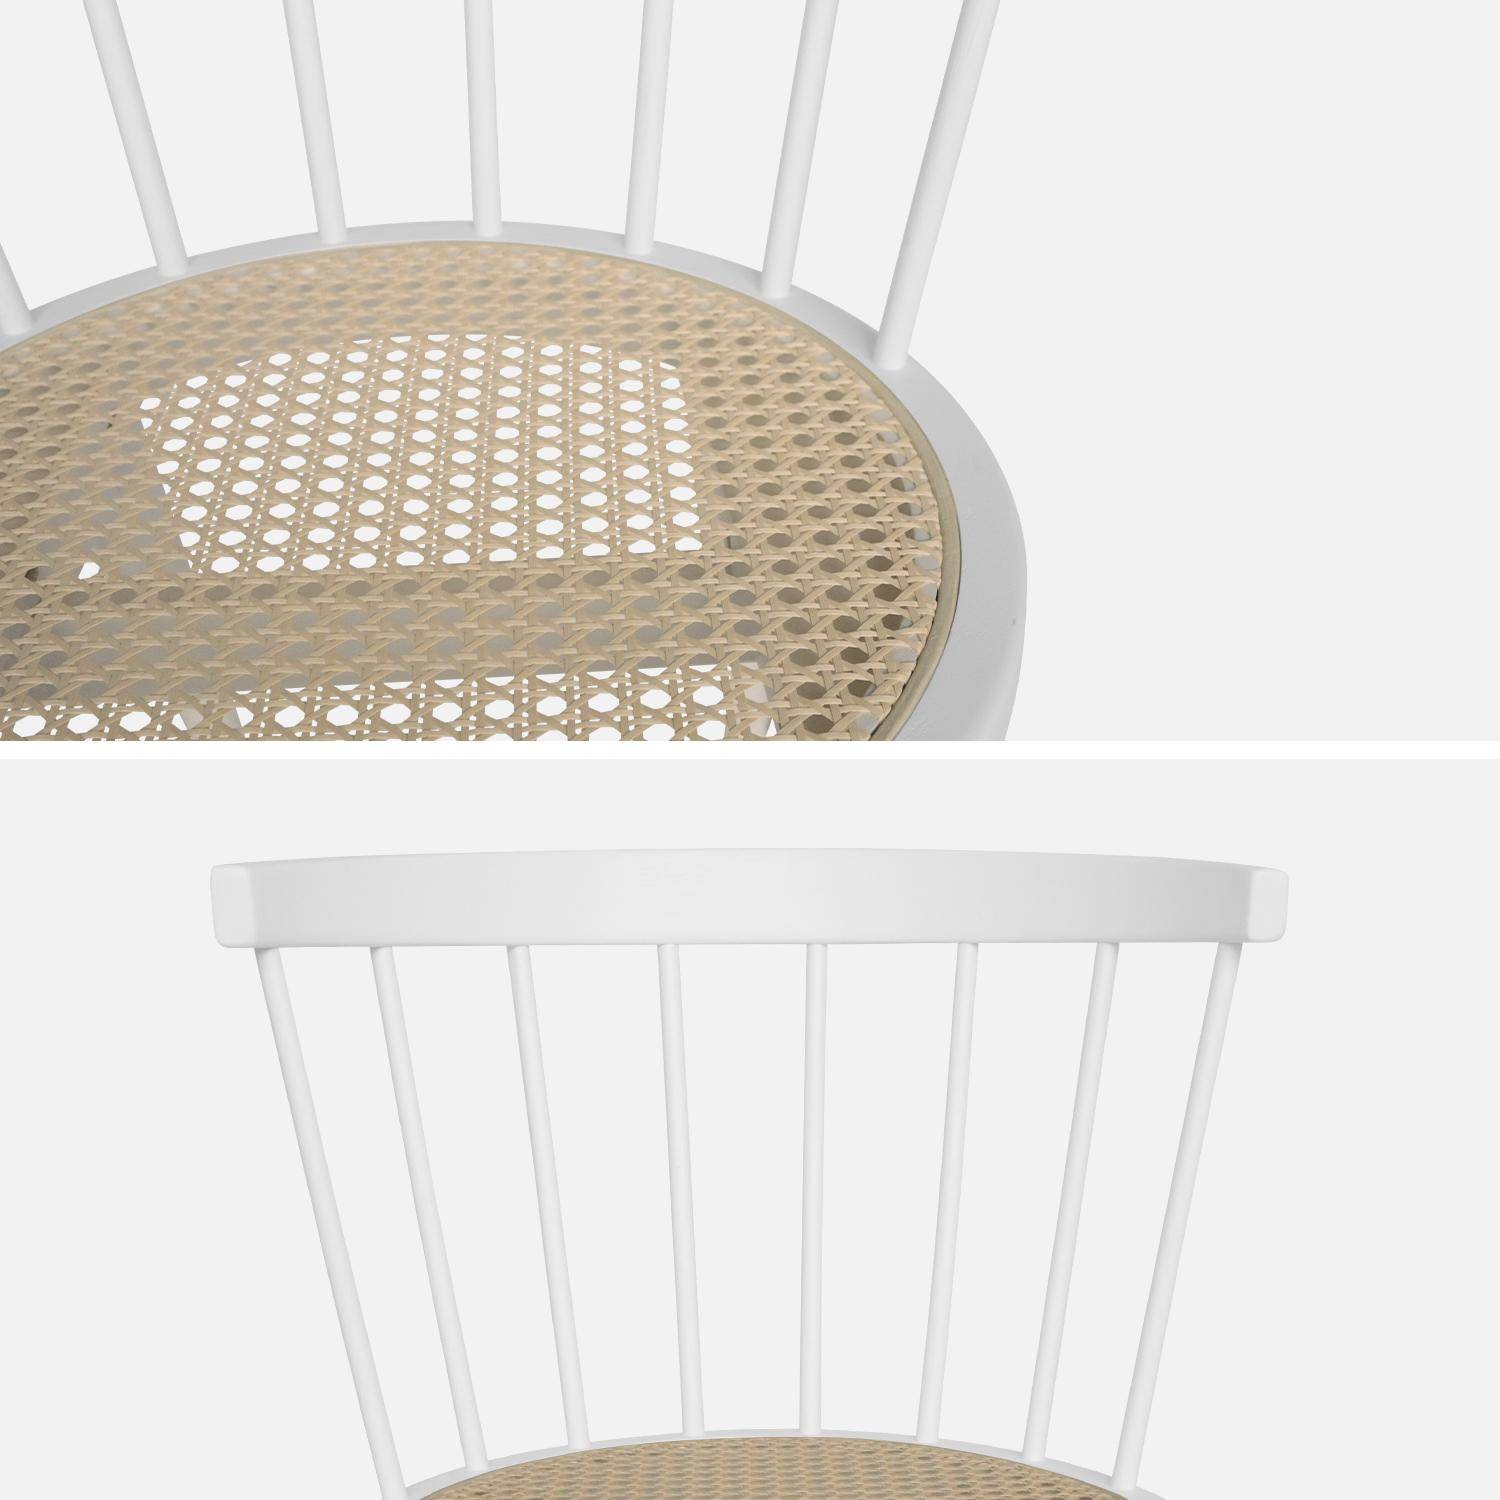 Pair of  Wood and Cane Chairs, Bohemian Spirit, White, L53 x W53.5 x H 6 cm,sweeek,Photo6